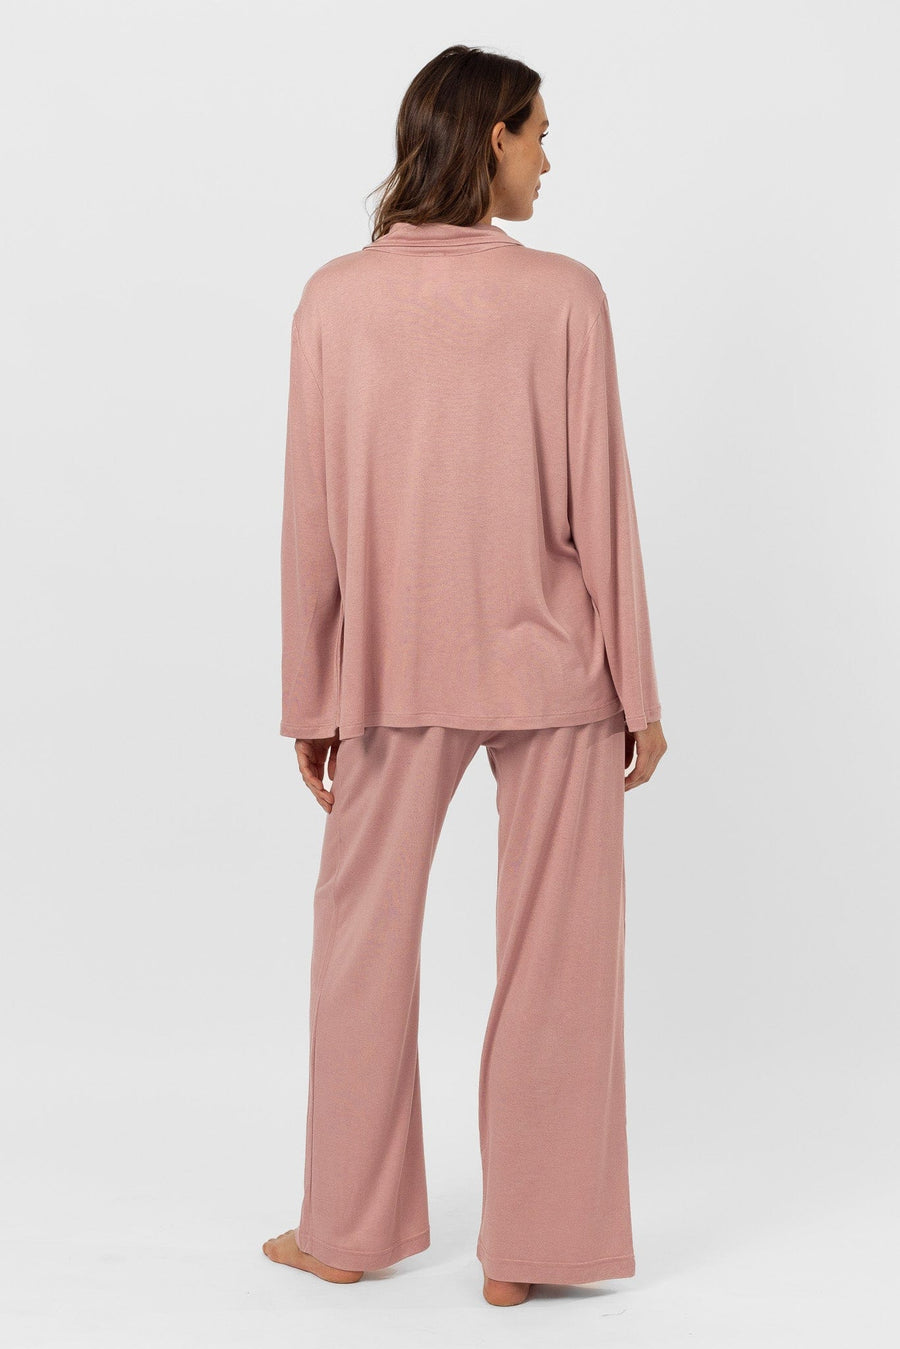 Epiphany Long Sleeve Top | Blush Pink Pyjama Tops Australia Online | Reverie the Label  TOPS Epiphany Long Sleeve Top